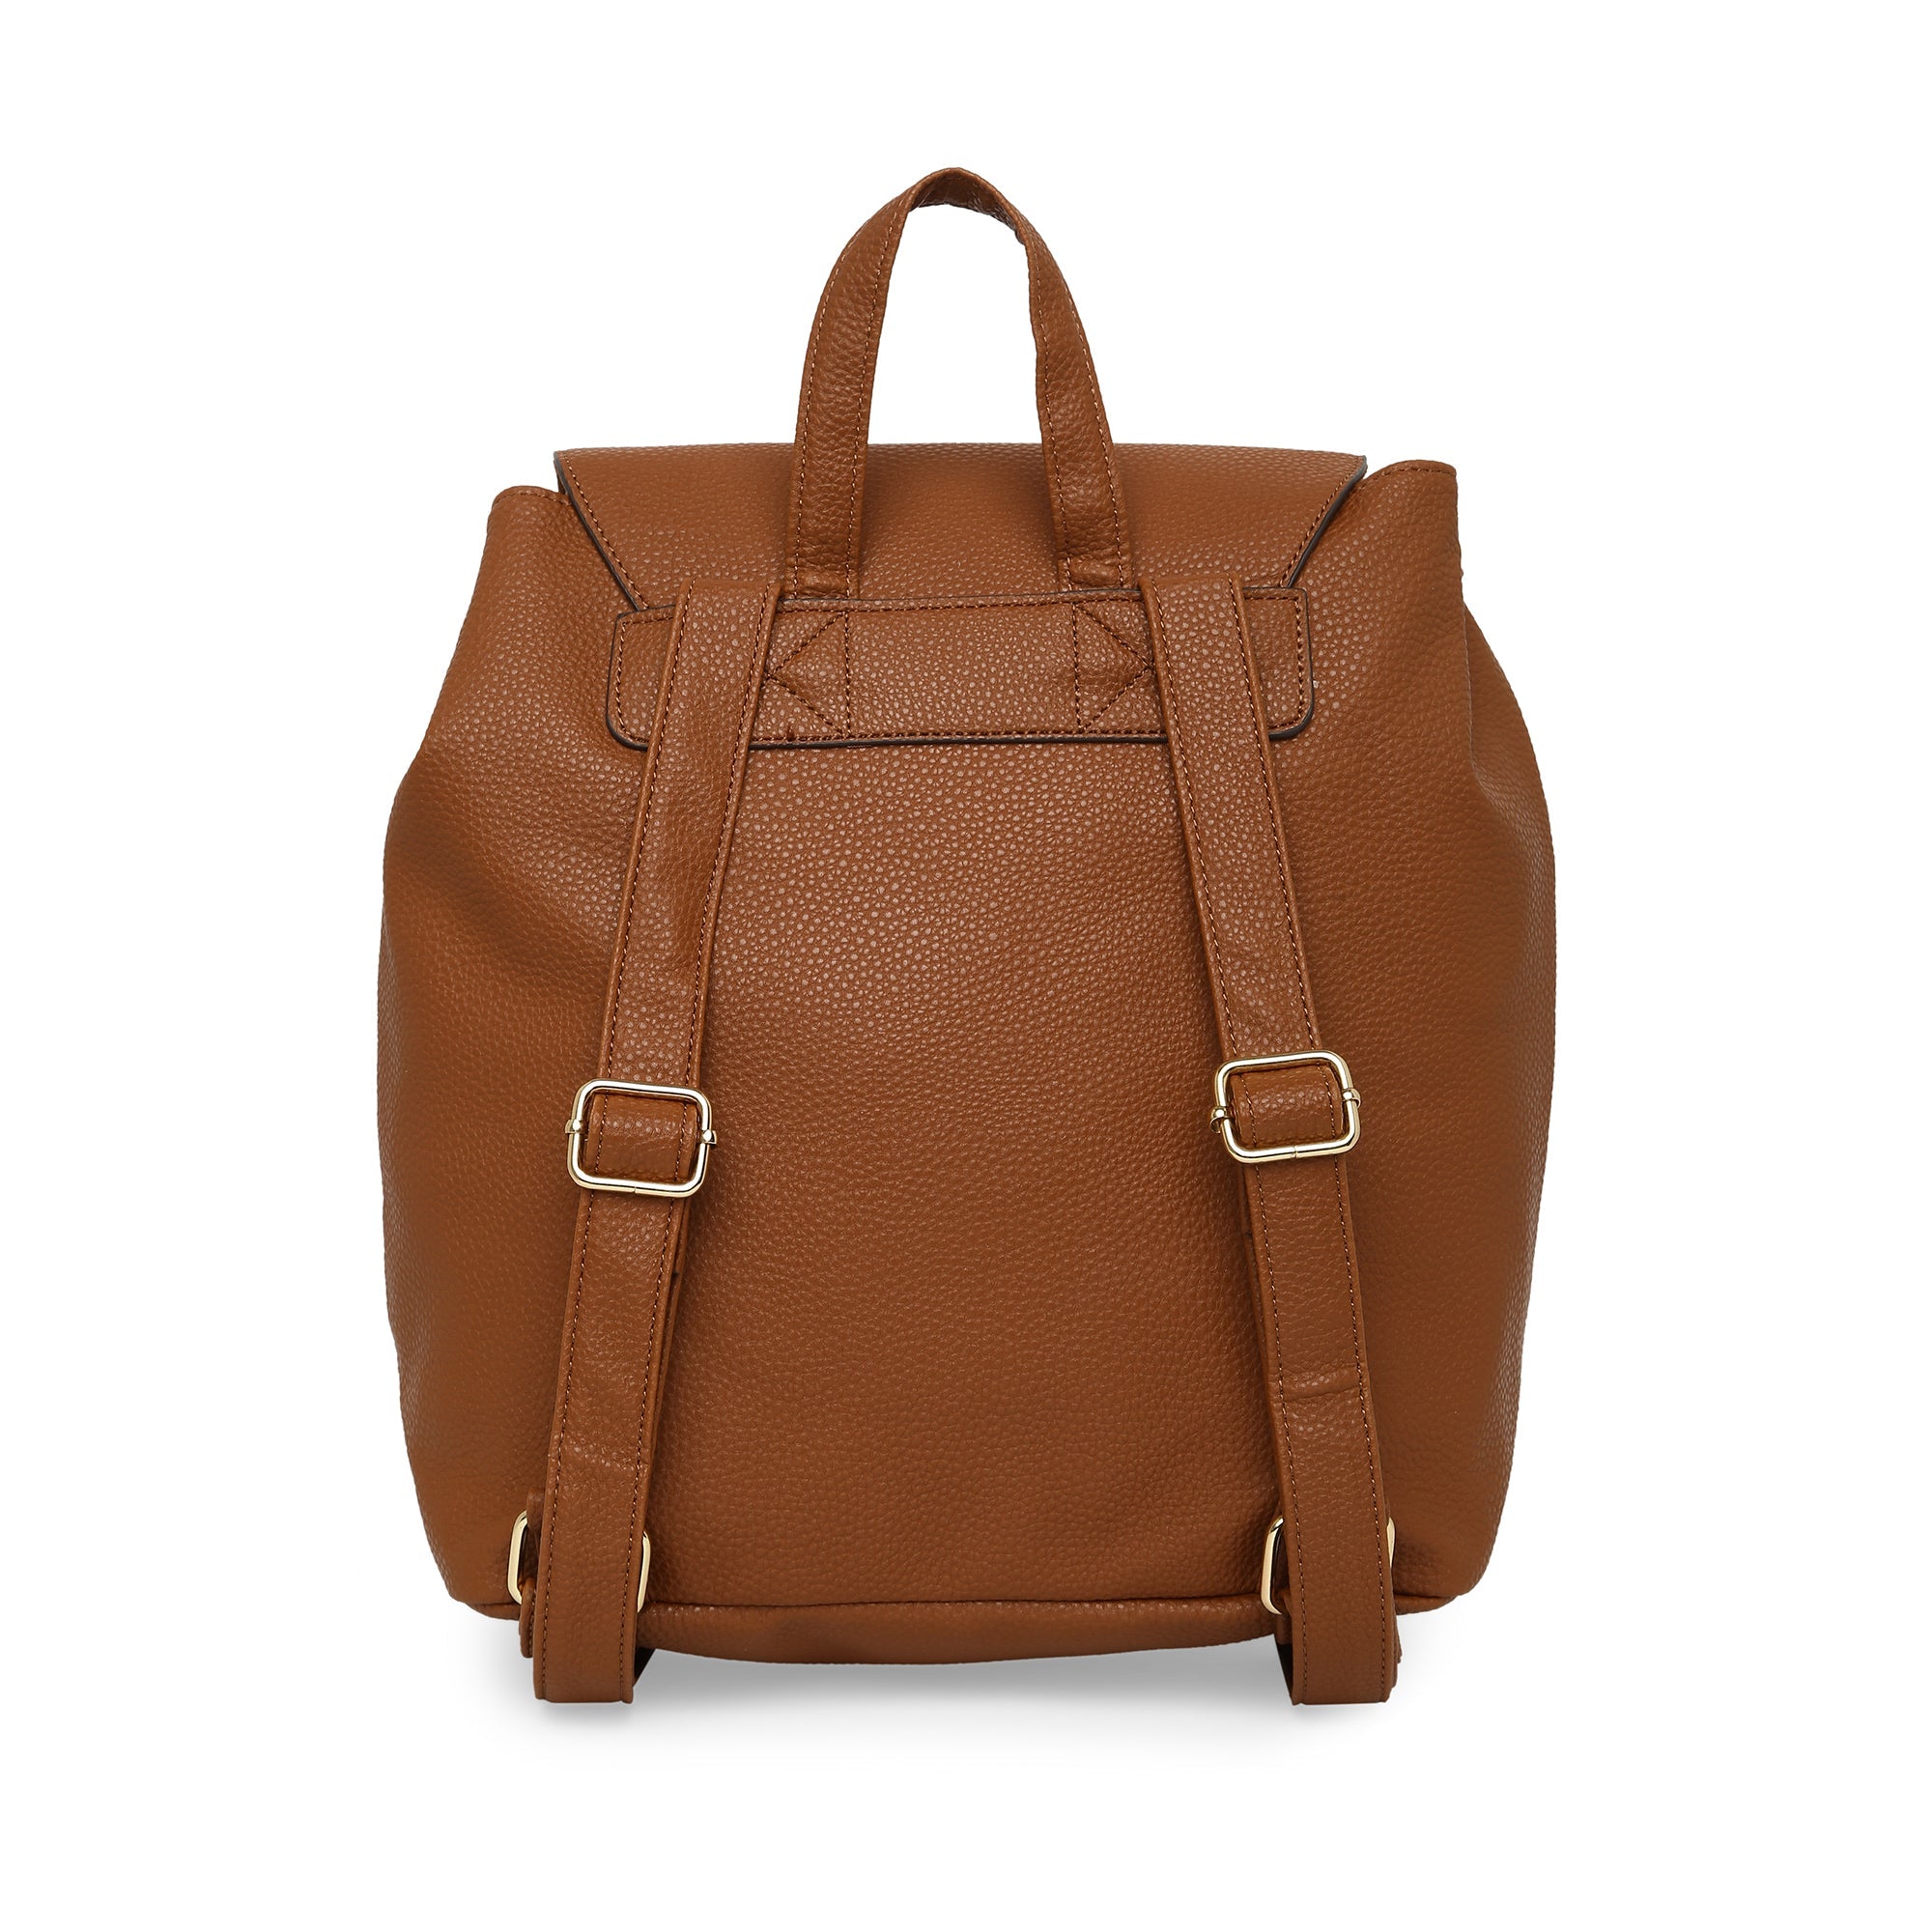 Designer Backpack Purses | Leather Backpack Purses